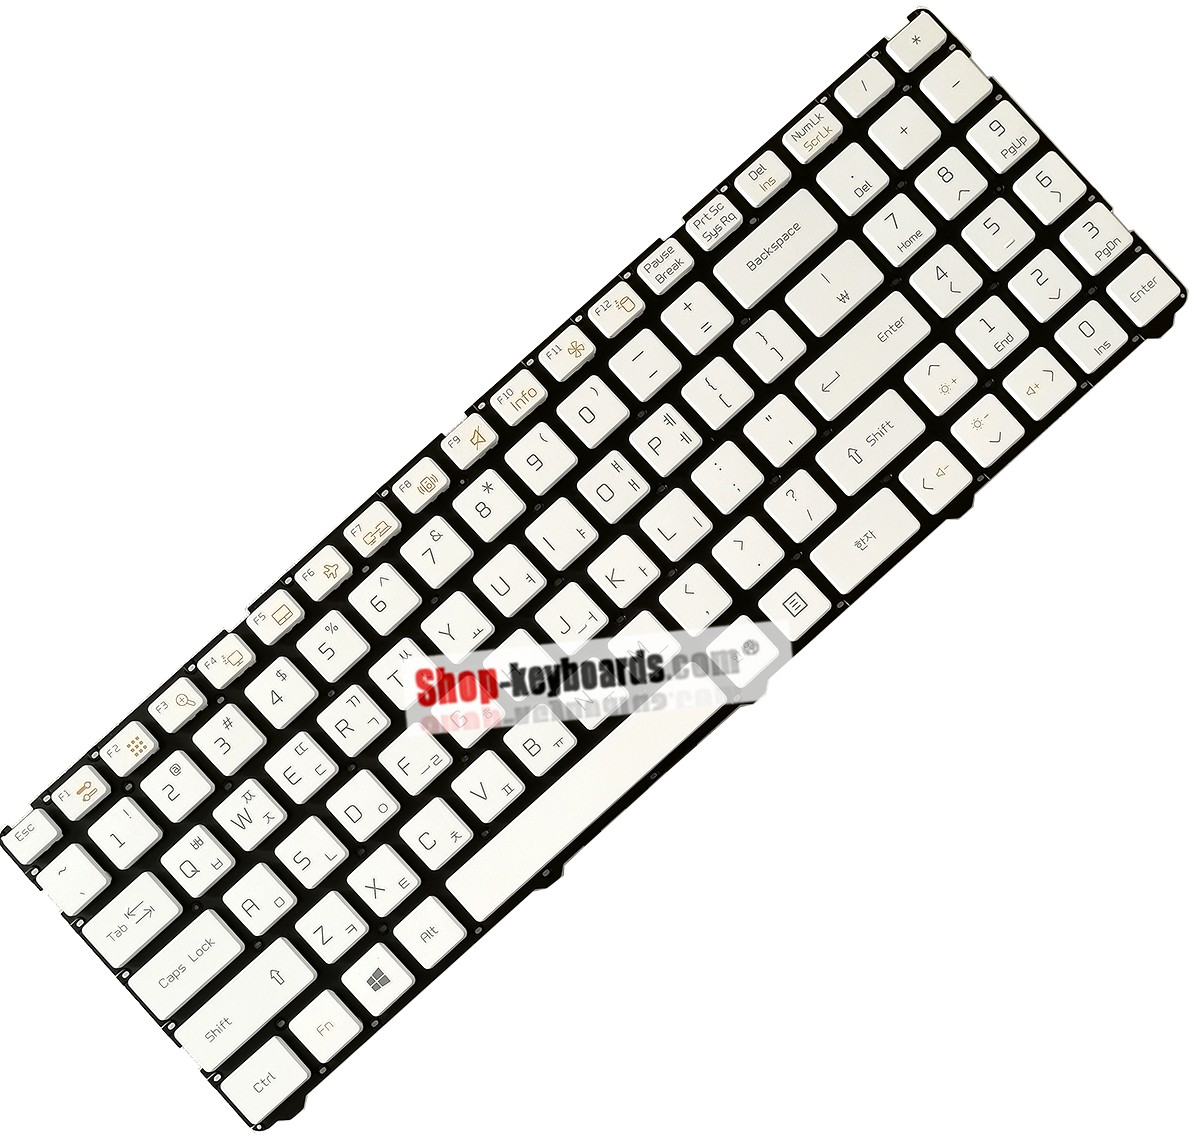 LG 15UD470-GX50K Keyboard replacement